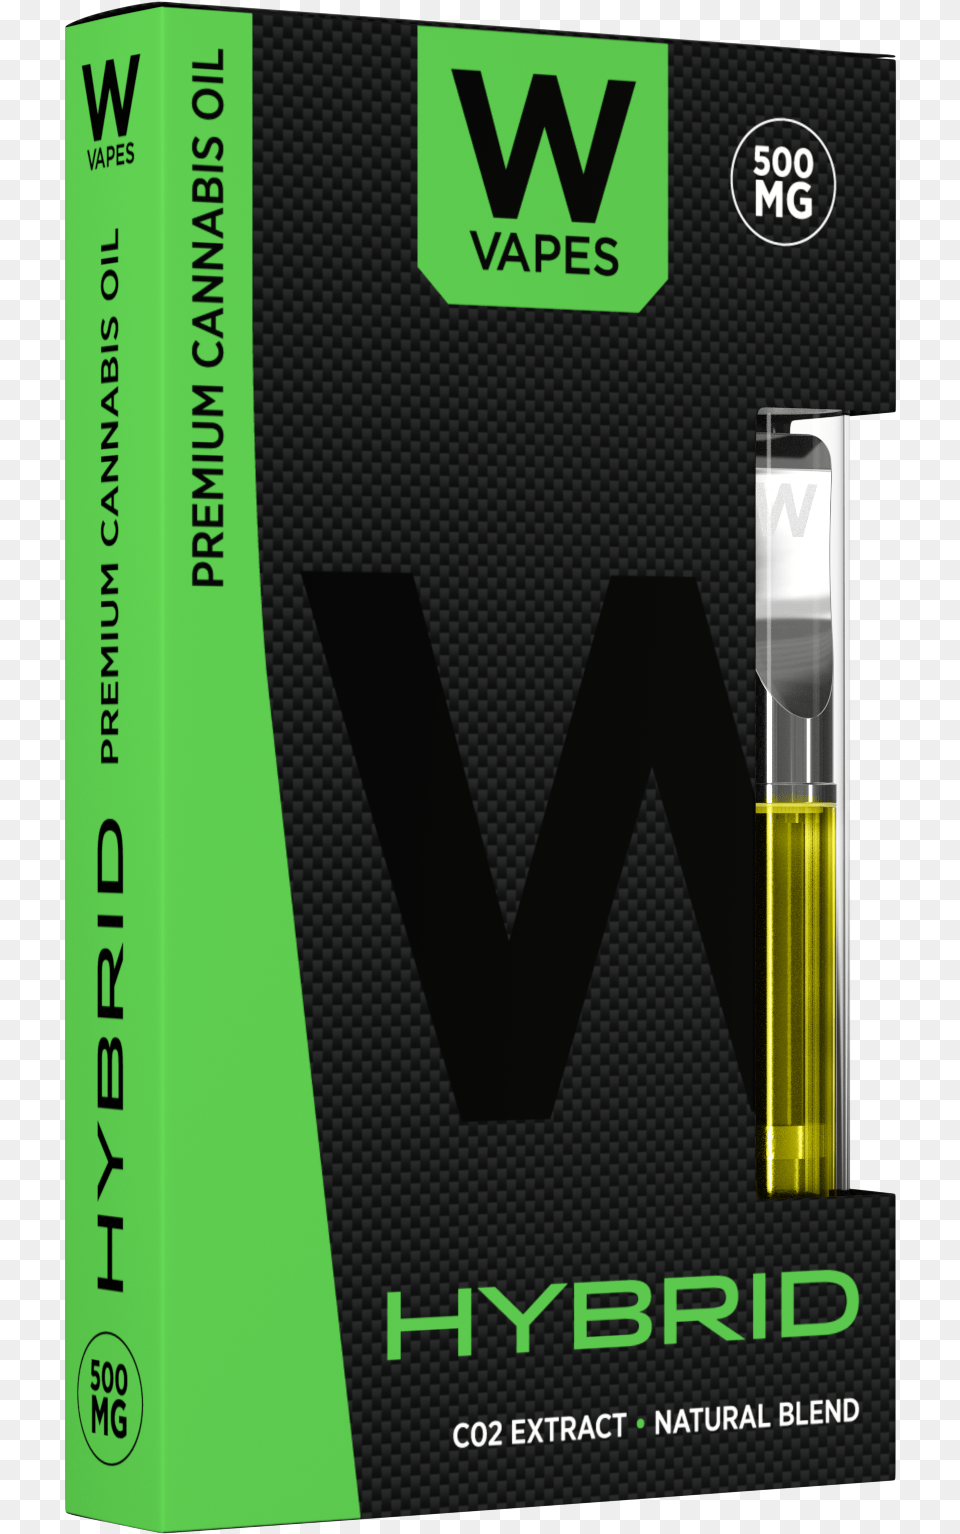 Gsc Hybrid Premium Cartridge By W Vapes Marijuana Vape Cartridge Png